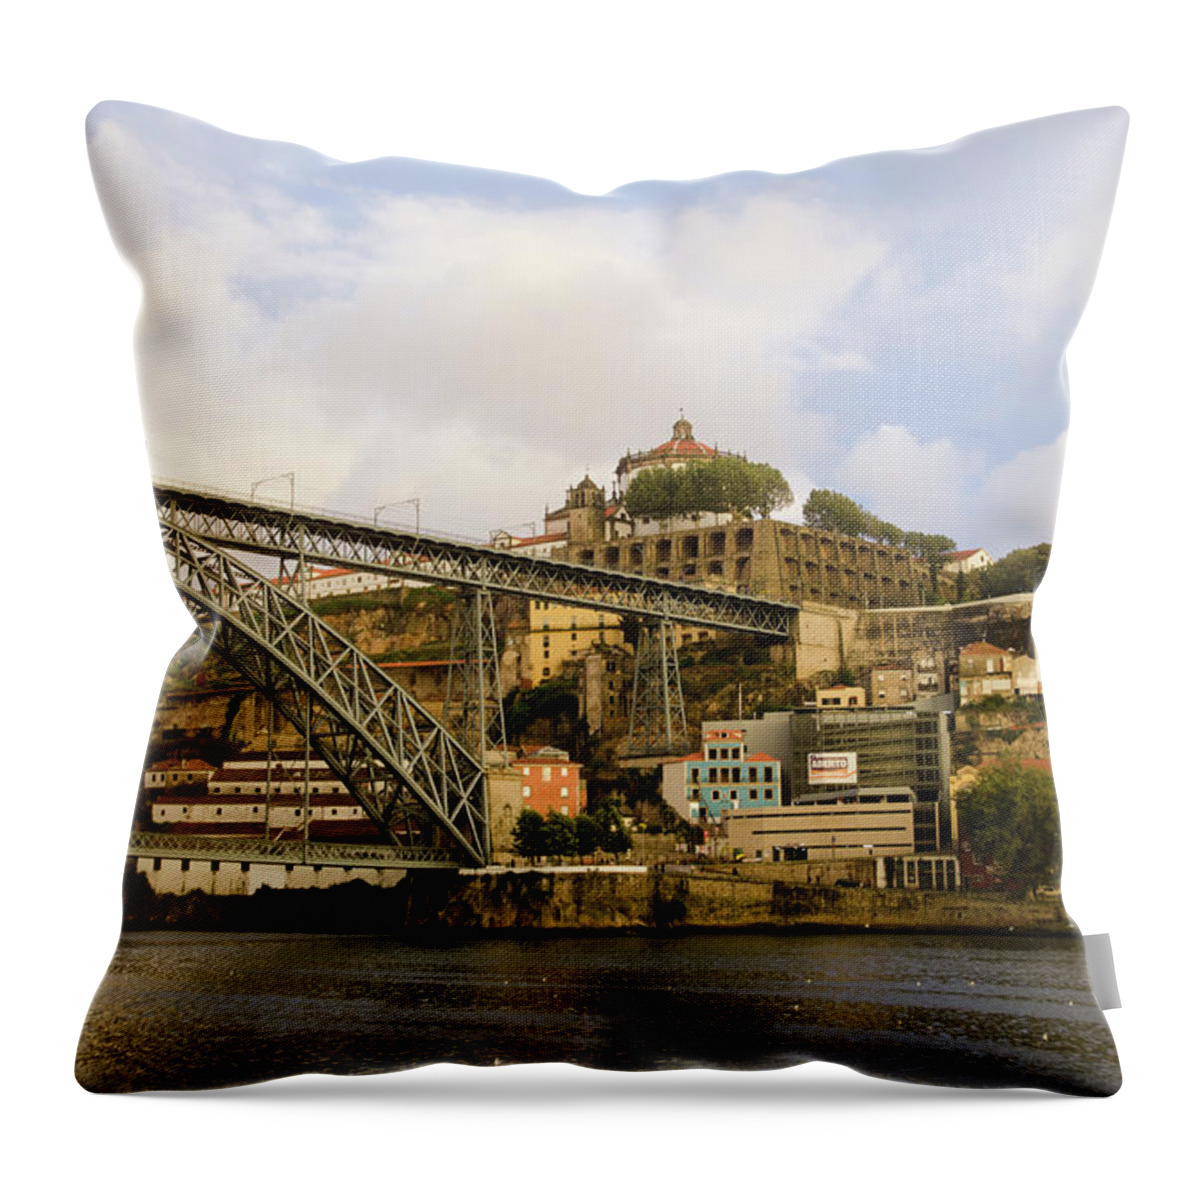 Tranquility Throw Pillow featuring the photograph Vila Nova De Gaia And The Douro River by Megan Ahrens